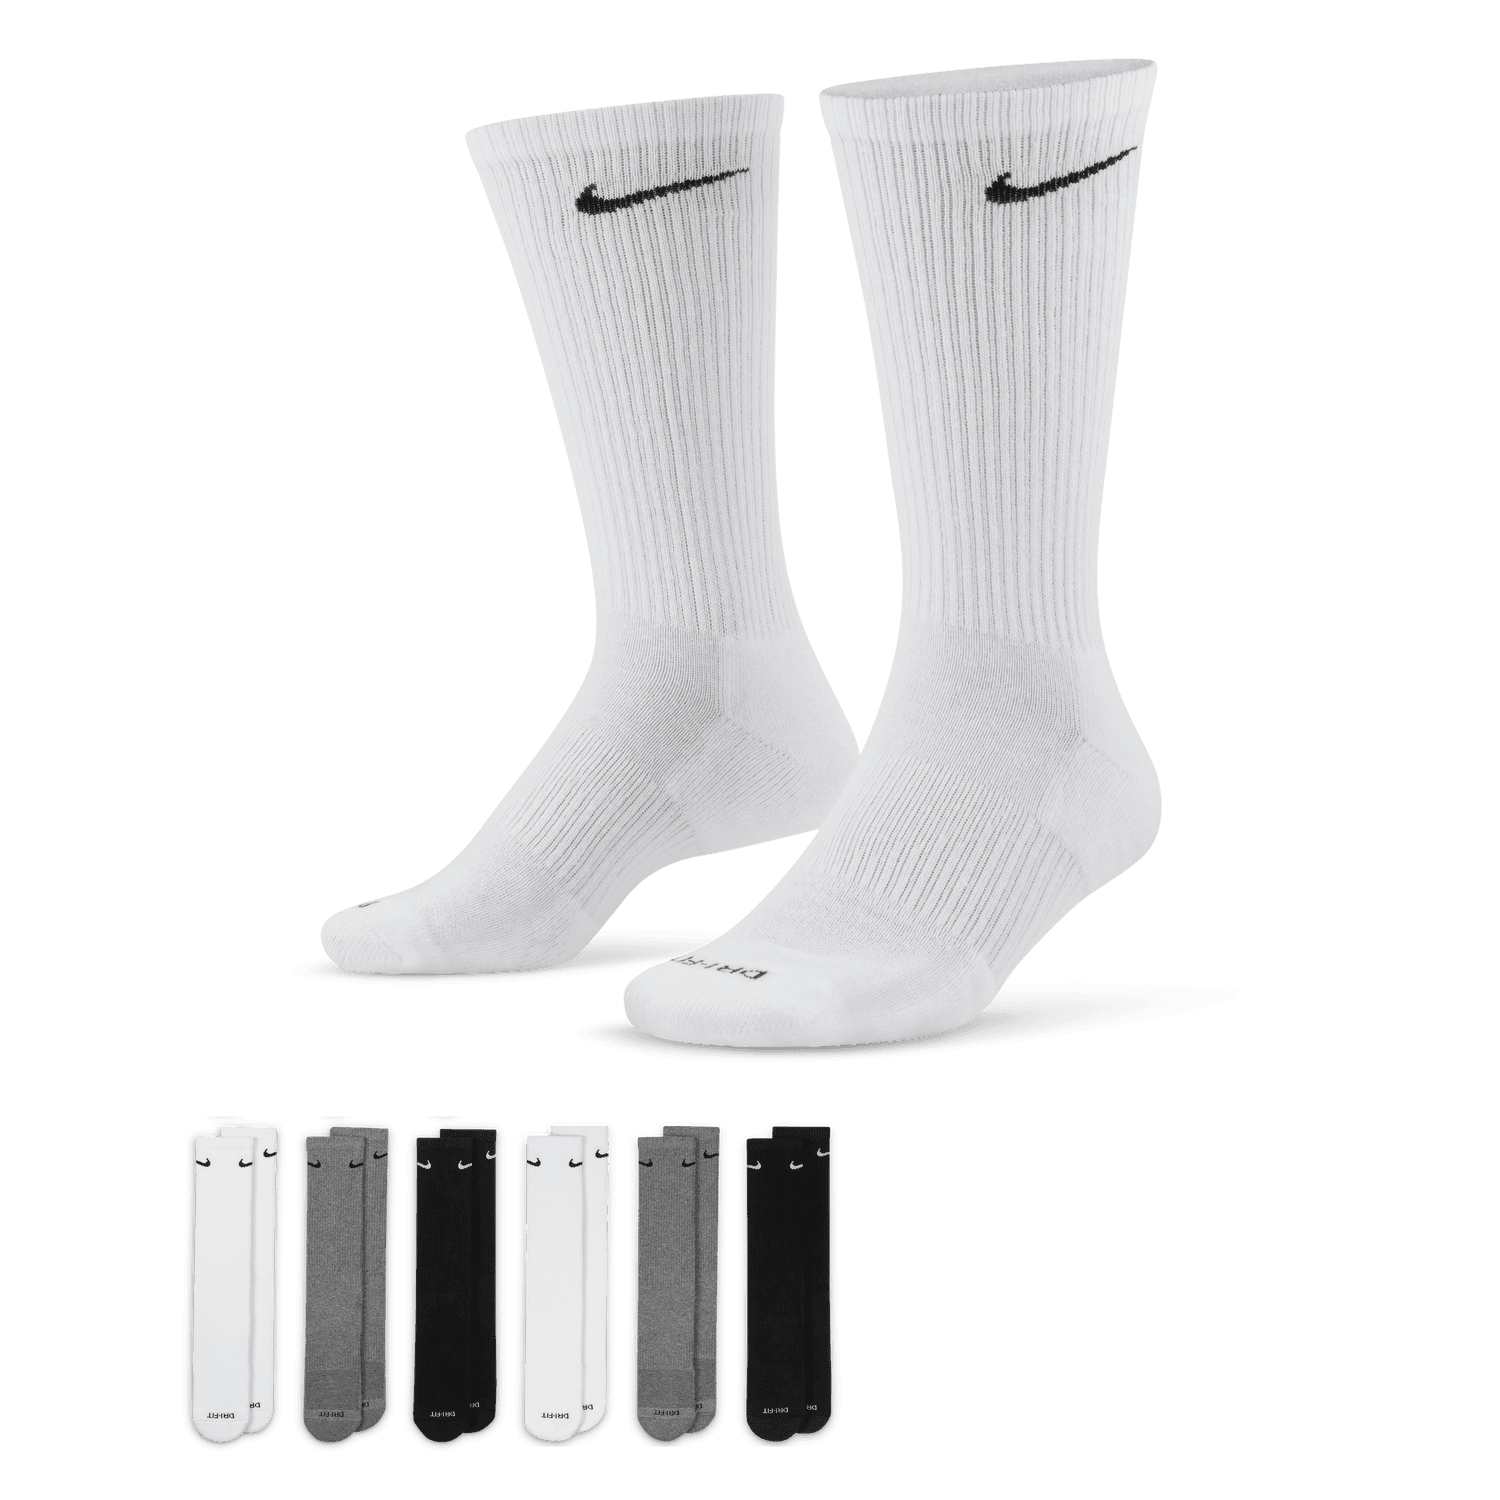 Nike Ankle Socks Everyday Plus Cushioned - Blue